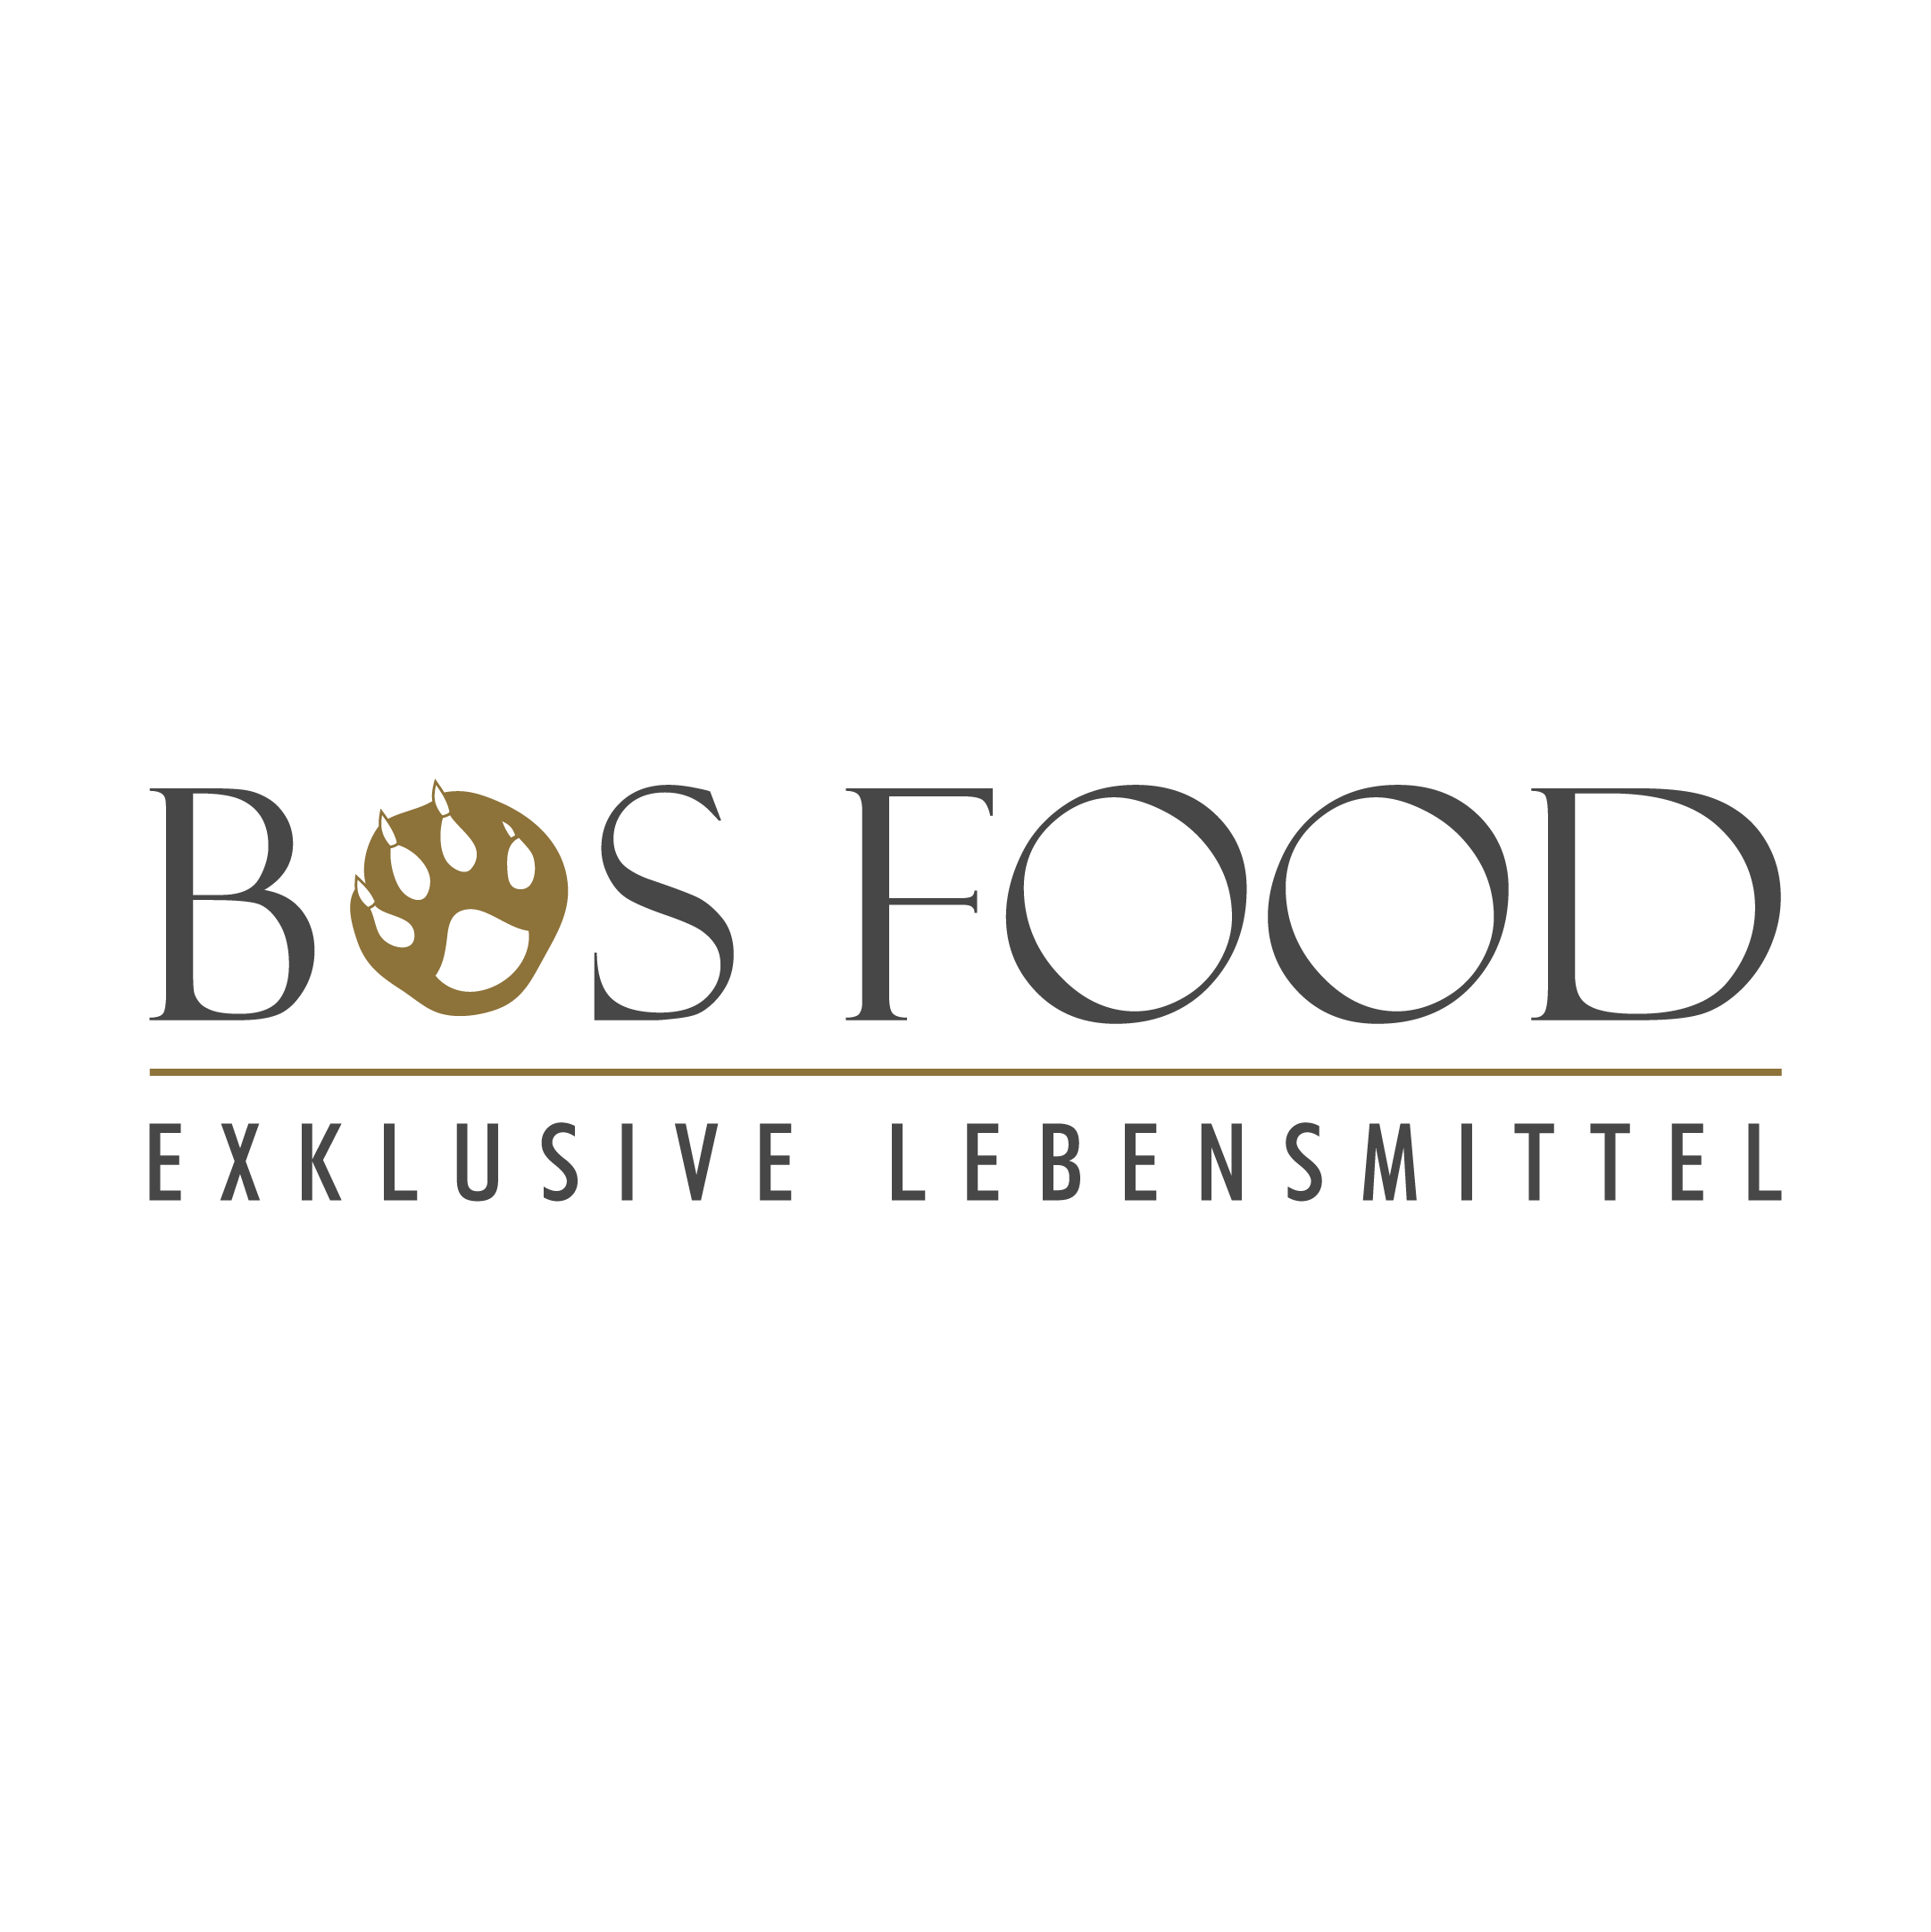 BOS FOOD Logo